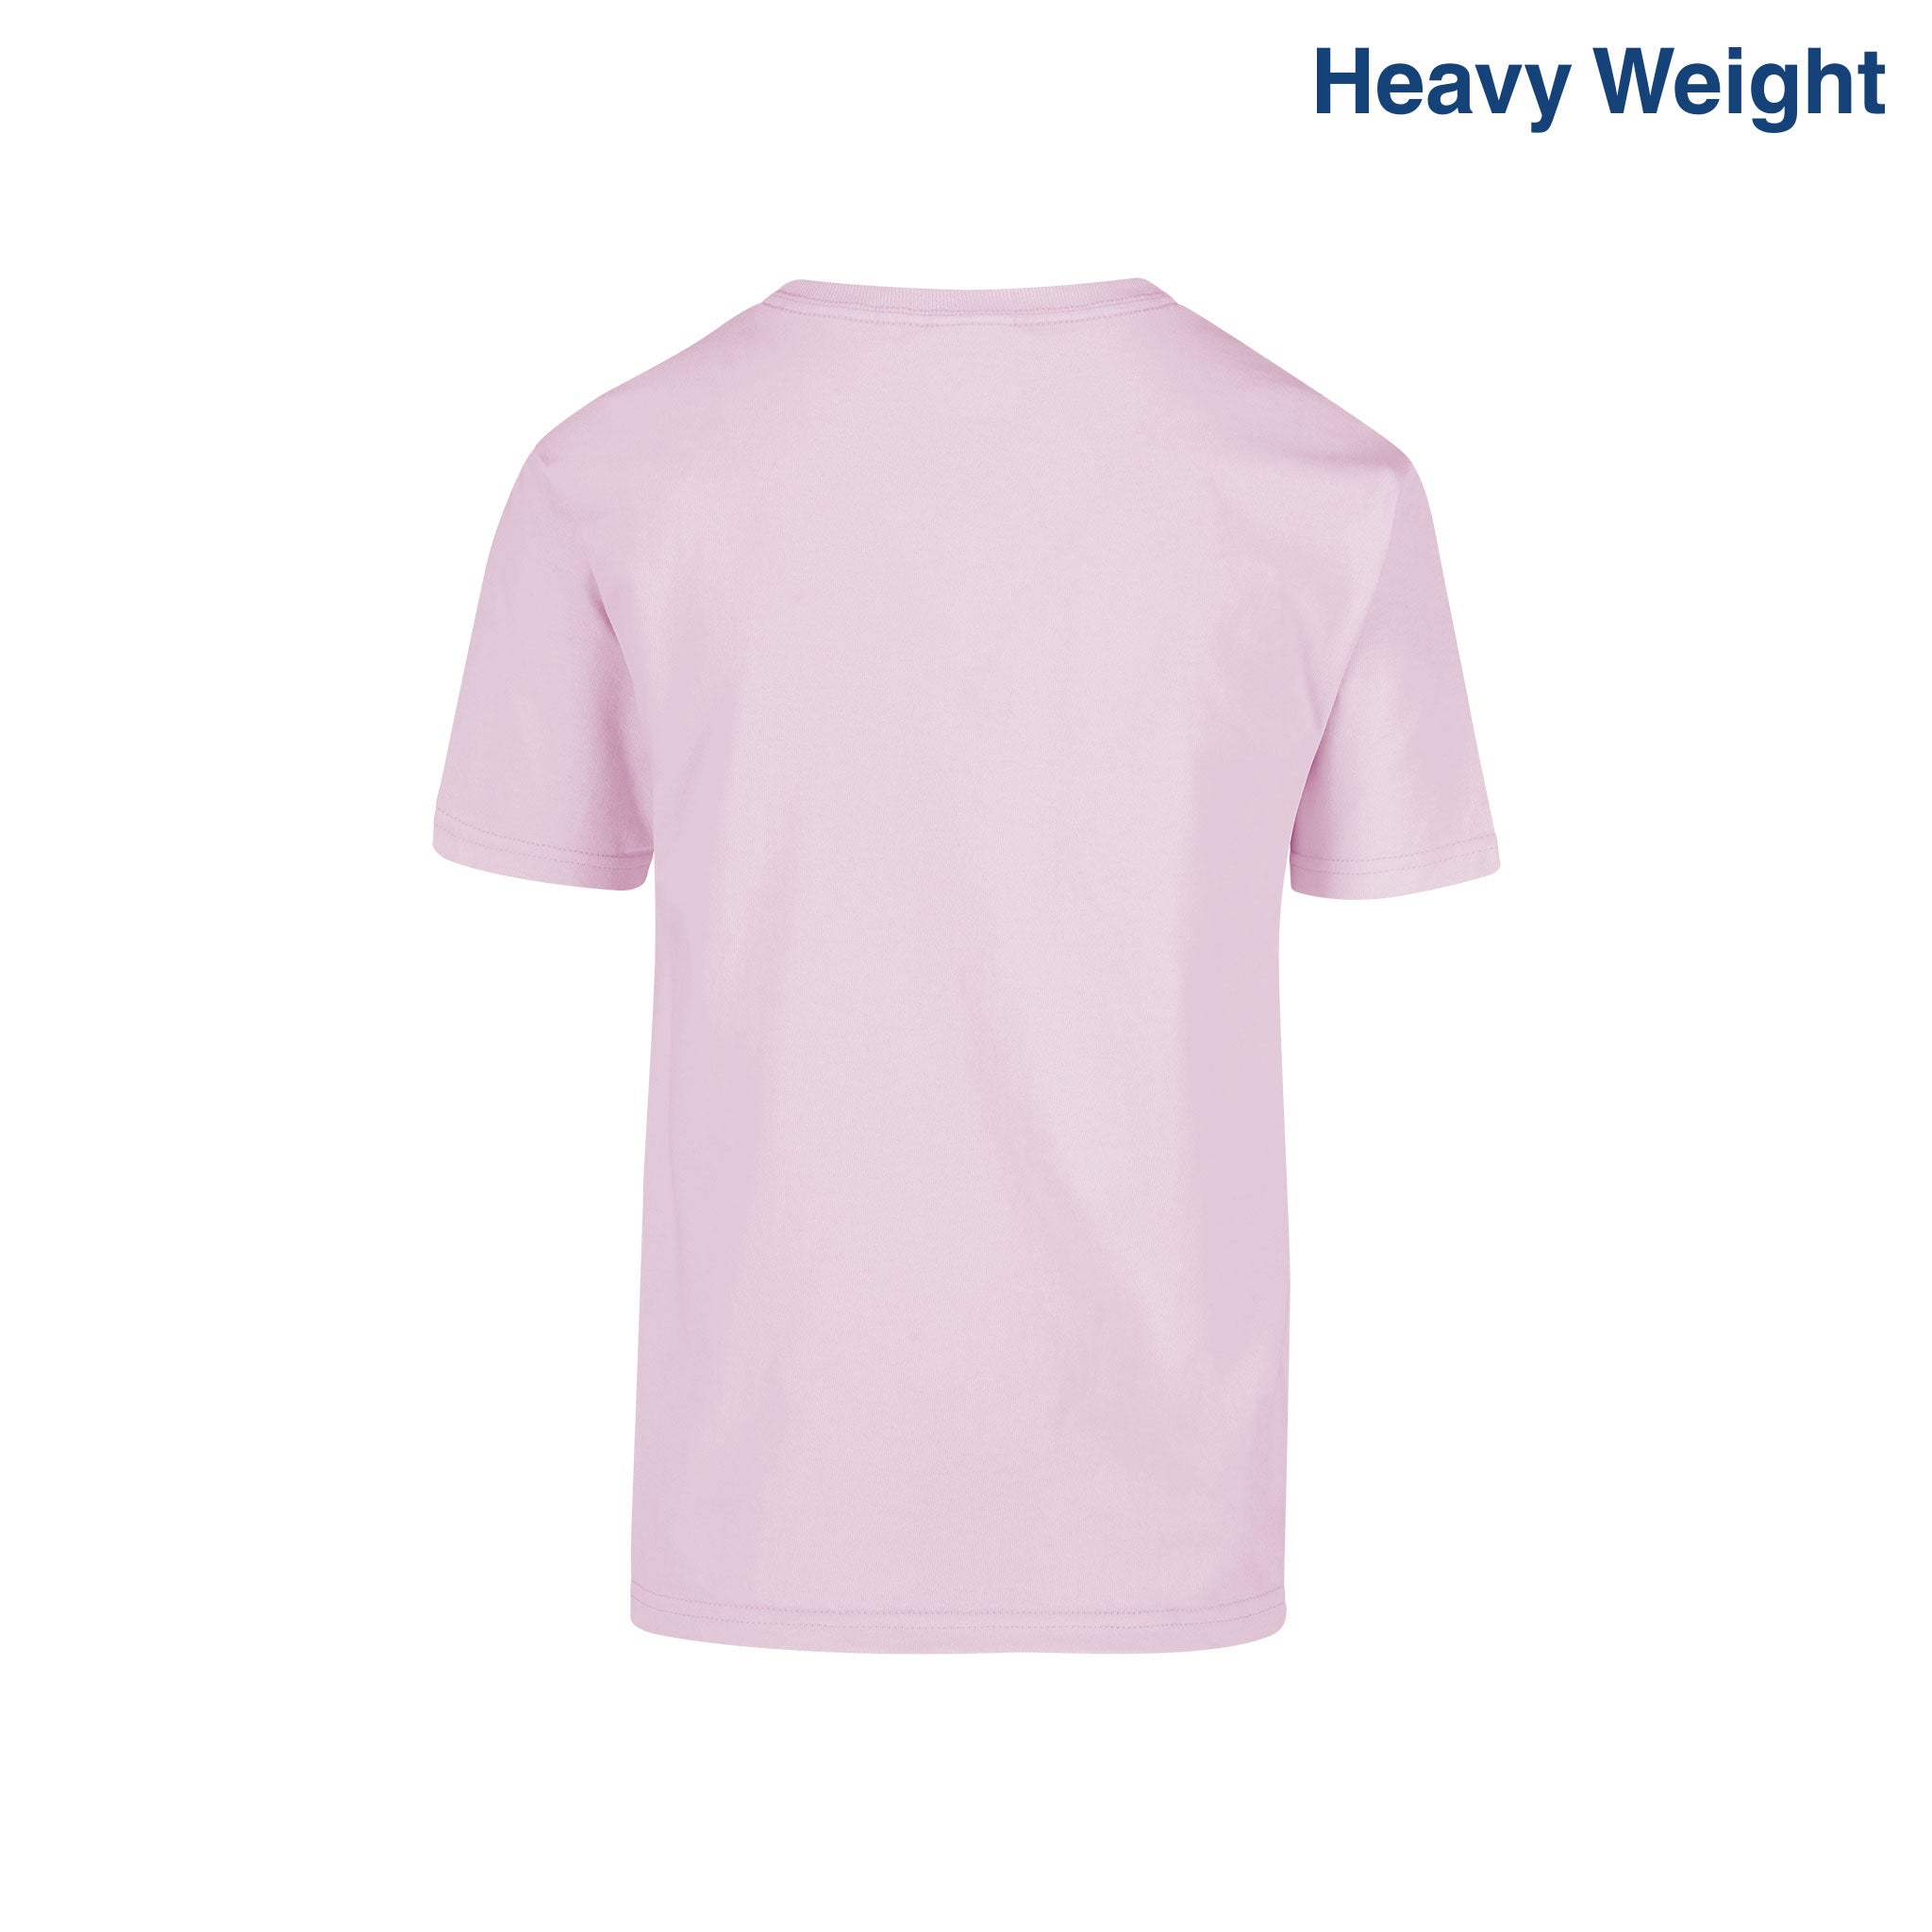 Youth\'s Heavy Weight Yazbek Mint Sleeve – USA Crew Short (Light Pink) Neck T-Shirt